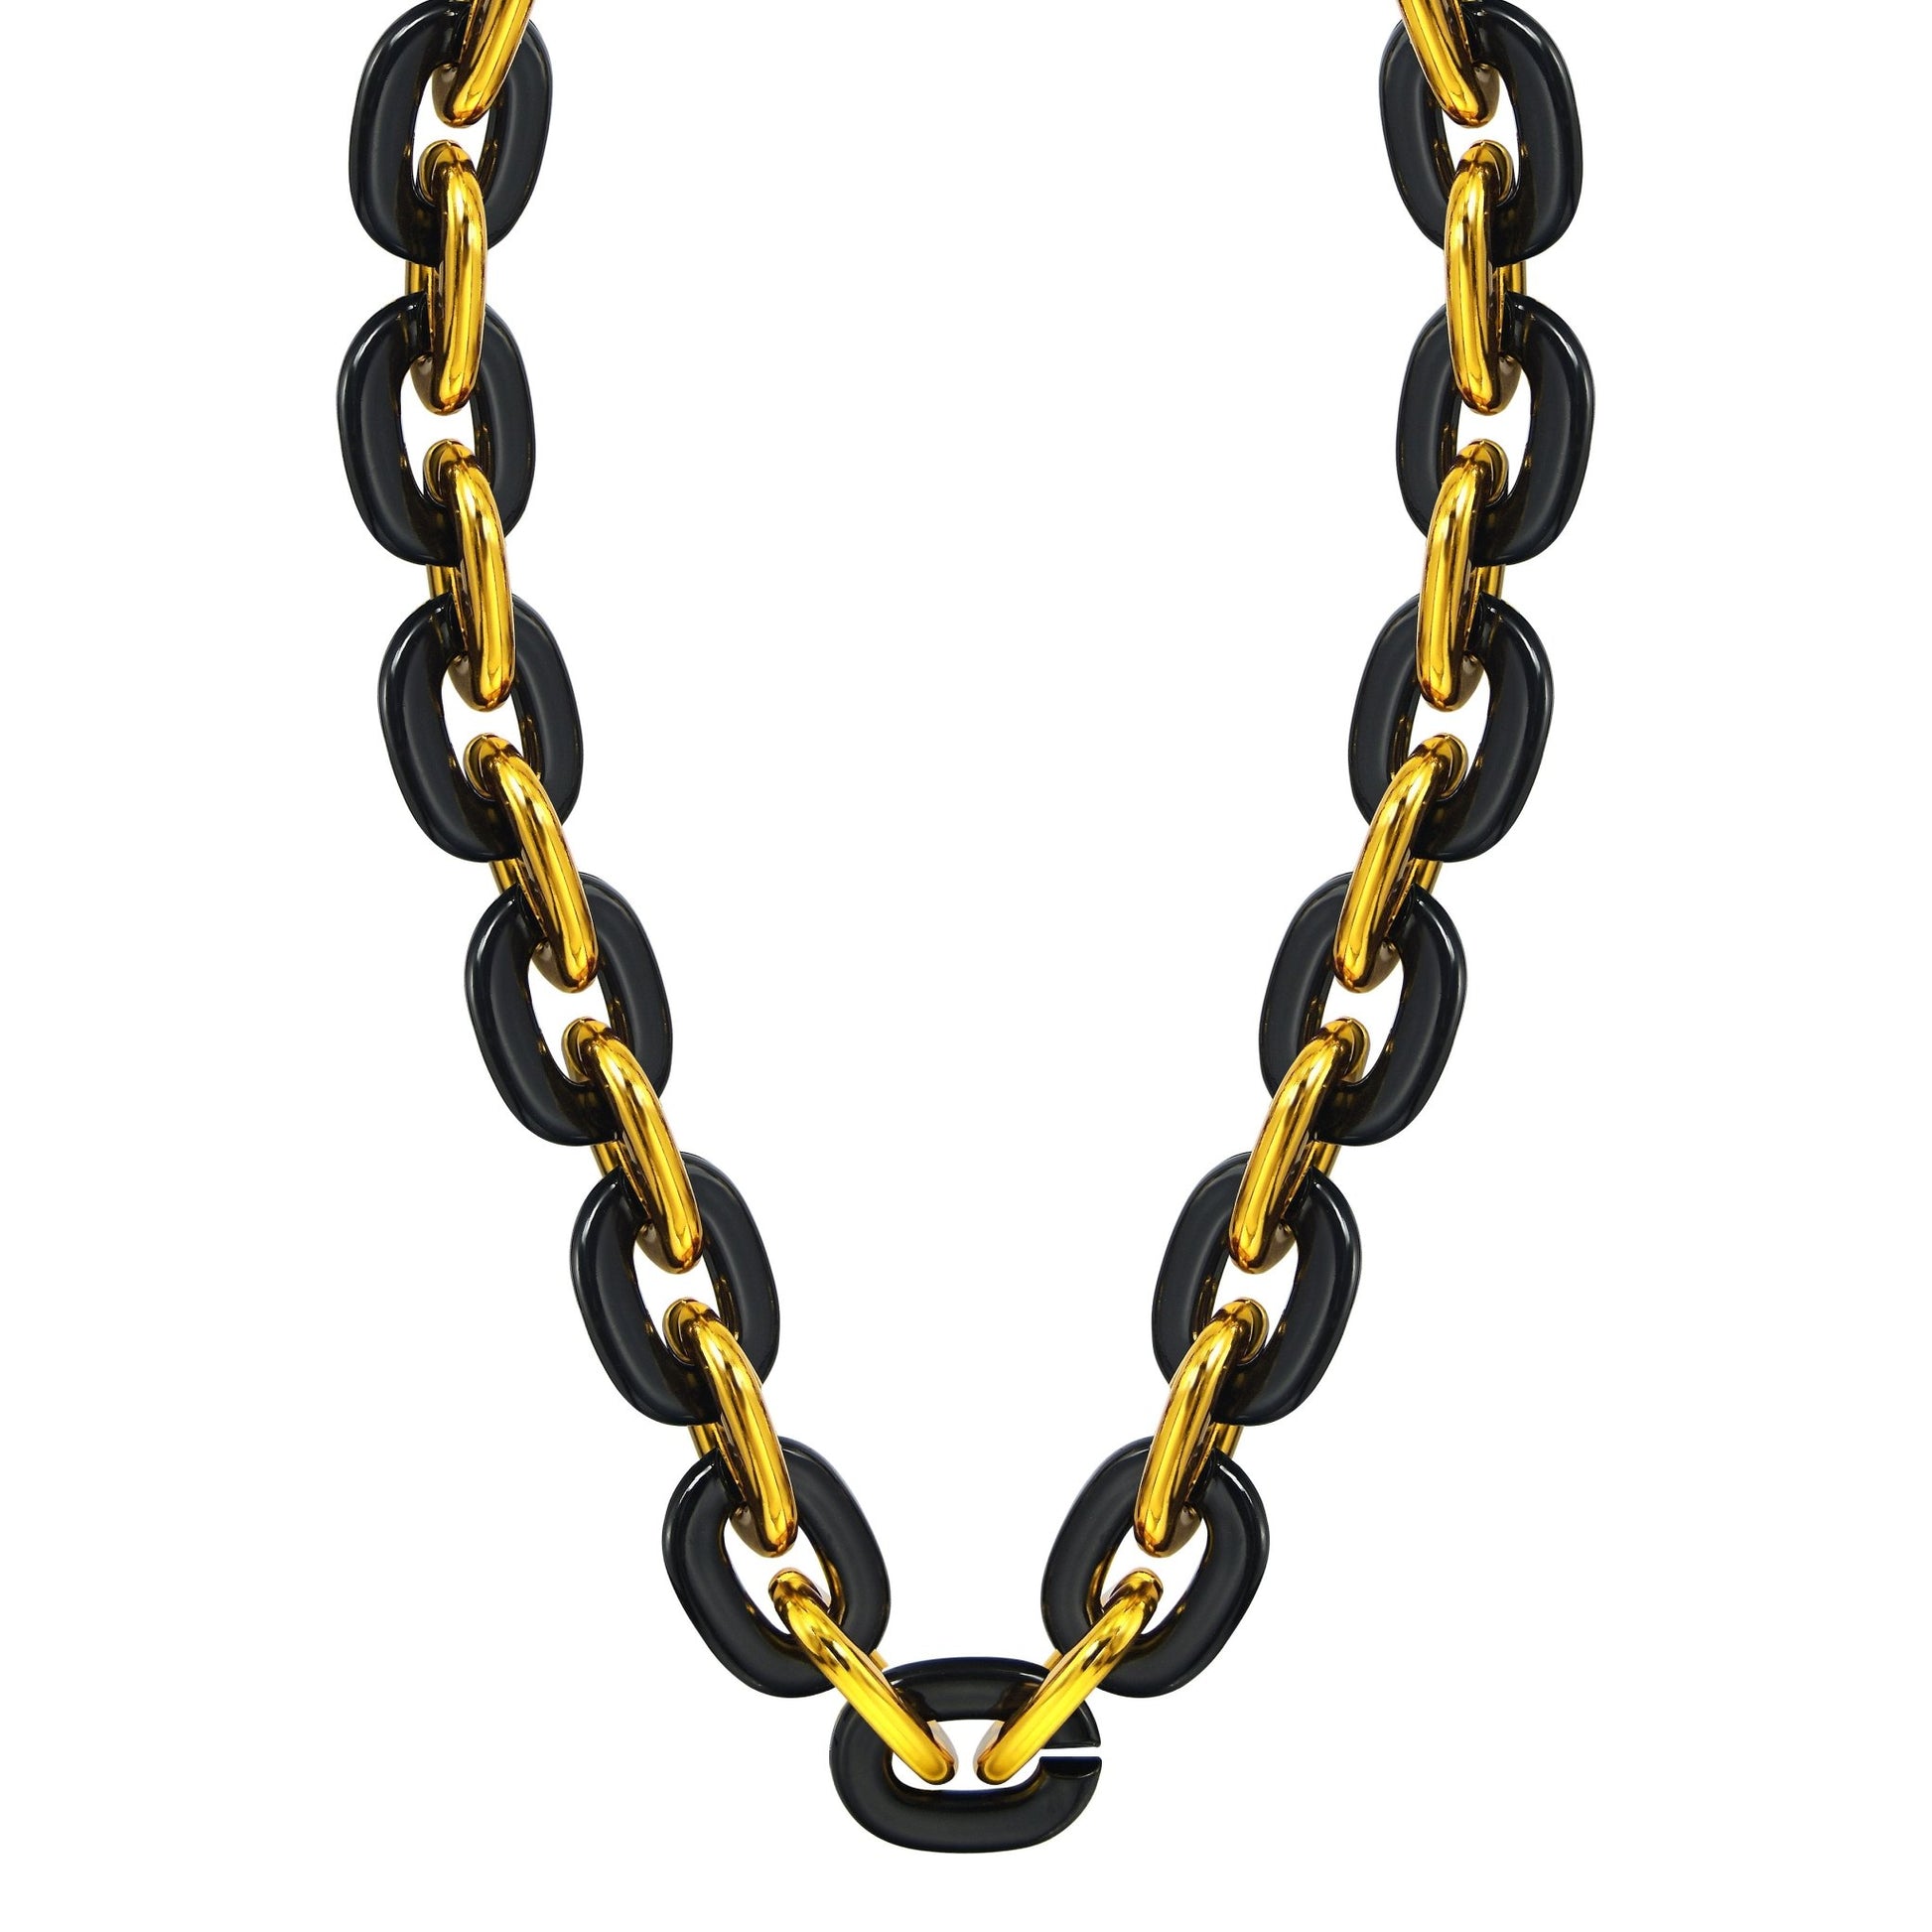 Jumbo Fan Chain Necklace - Gamedays Gear - Black / Gold